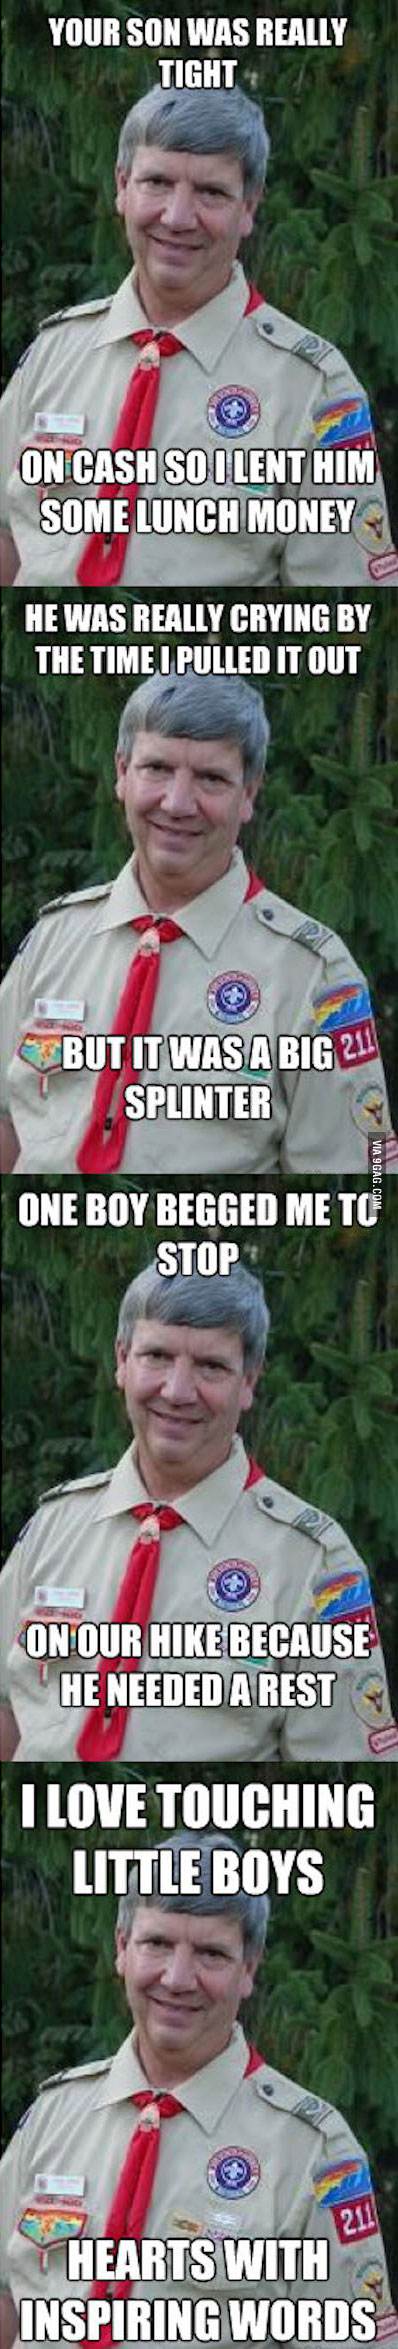 boy scout leader misdirection jokes, meme